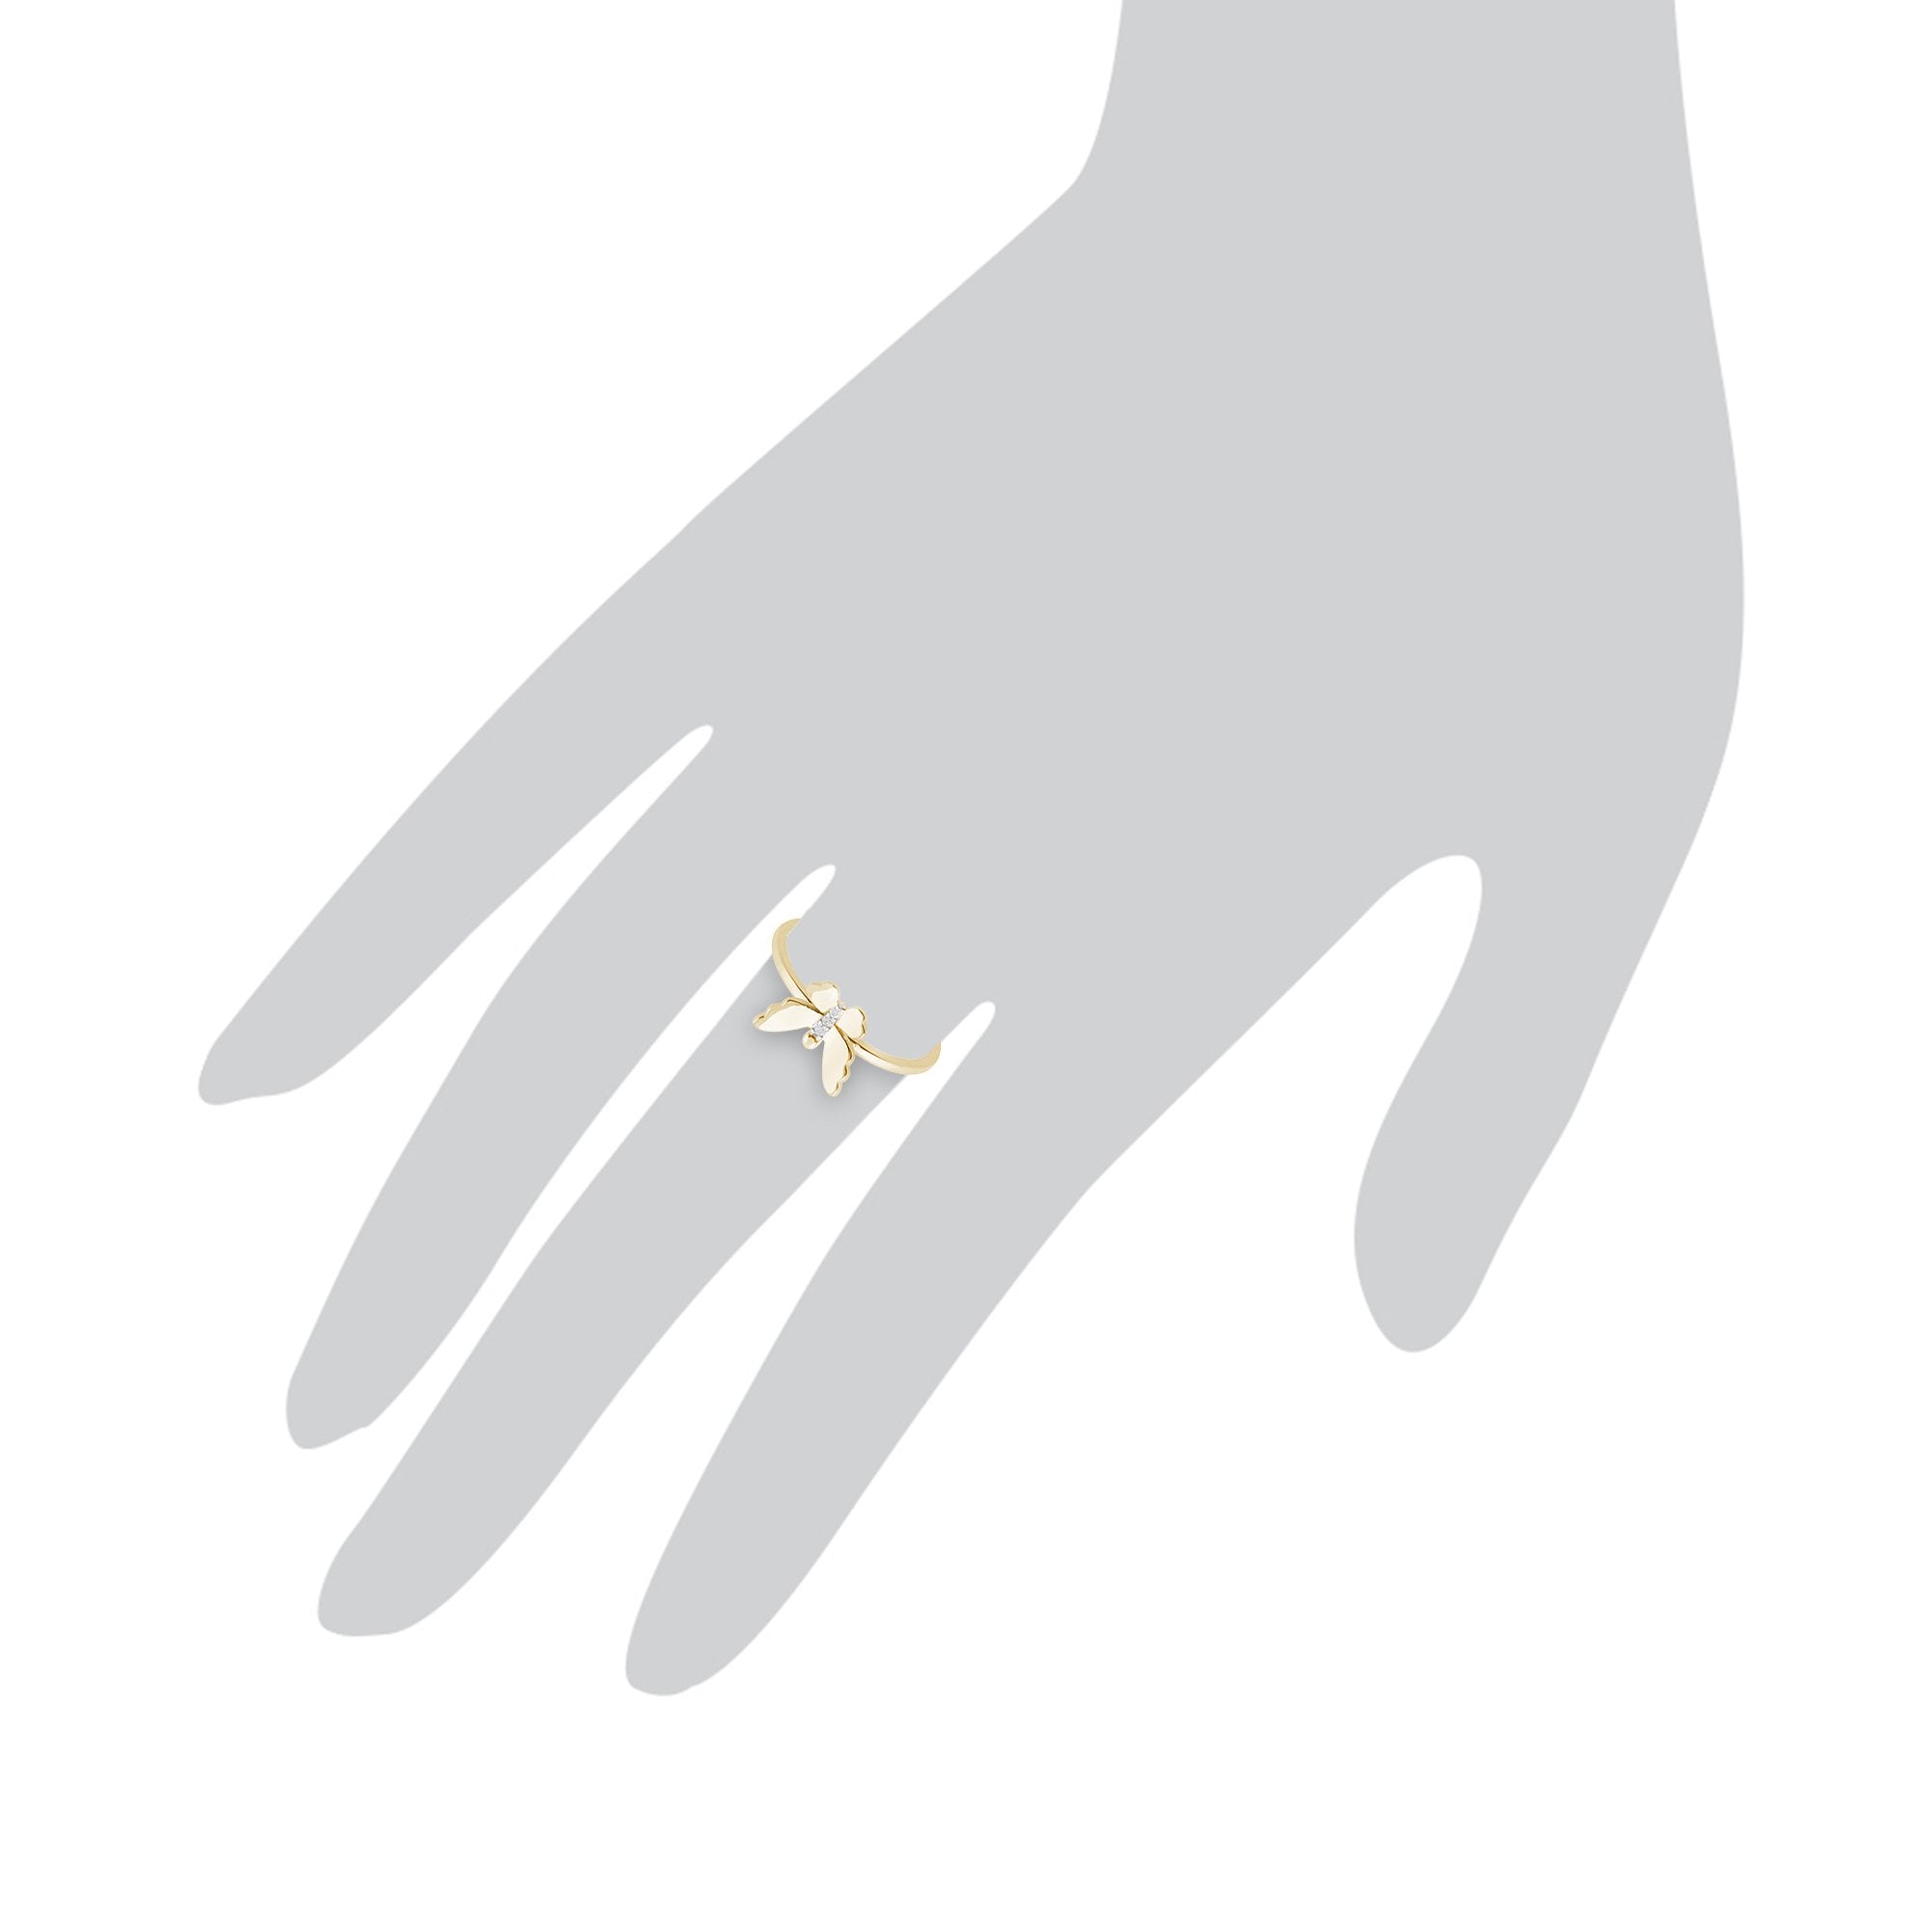 Gemondo 9ct Yellow Gold 0.01ct Diamond Butterfly Ring Image 3